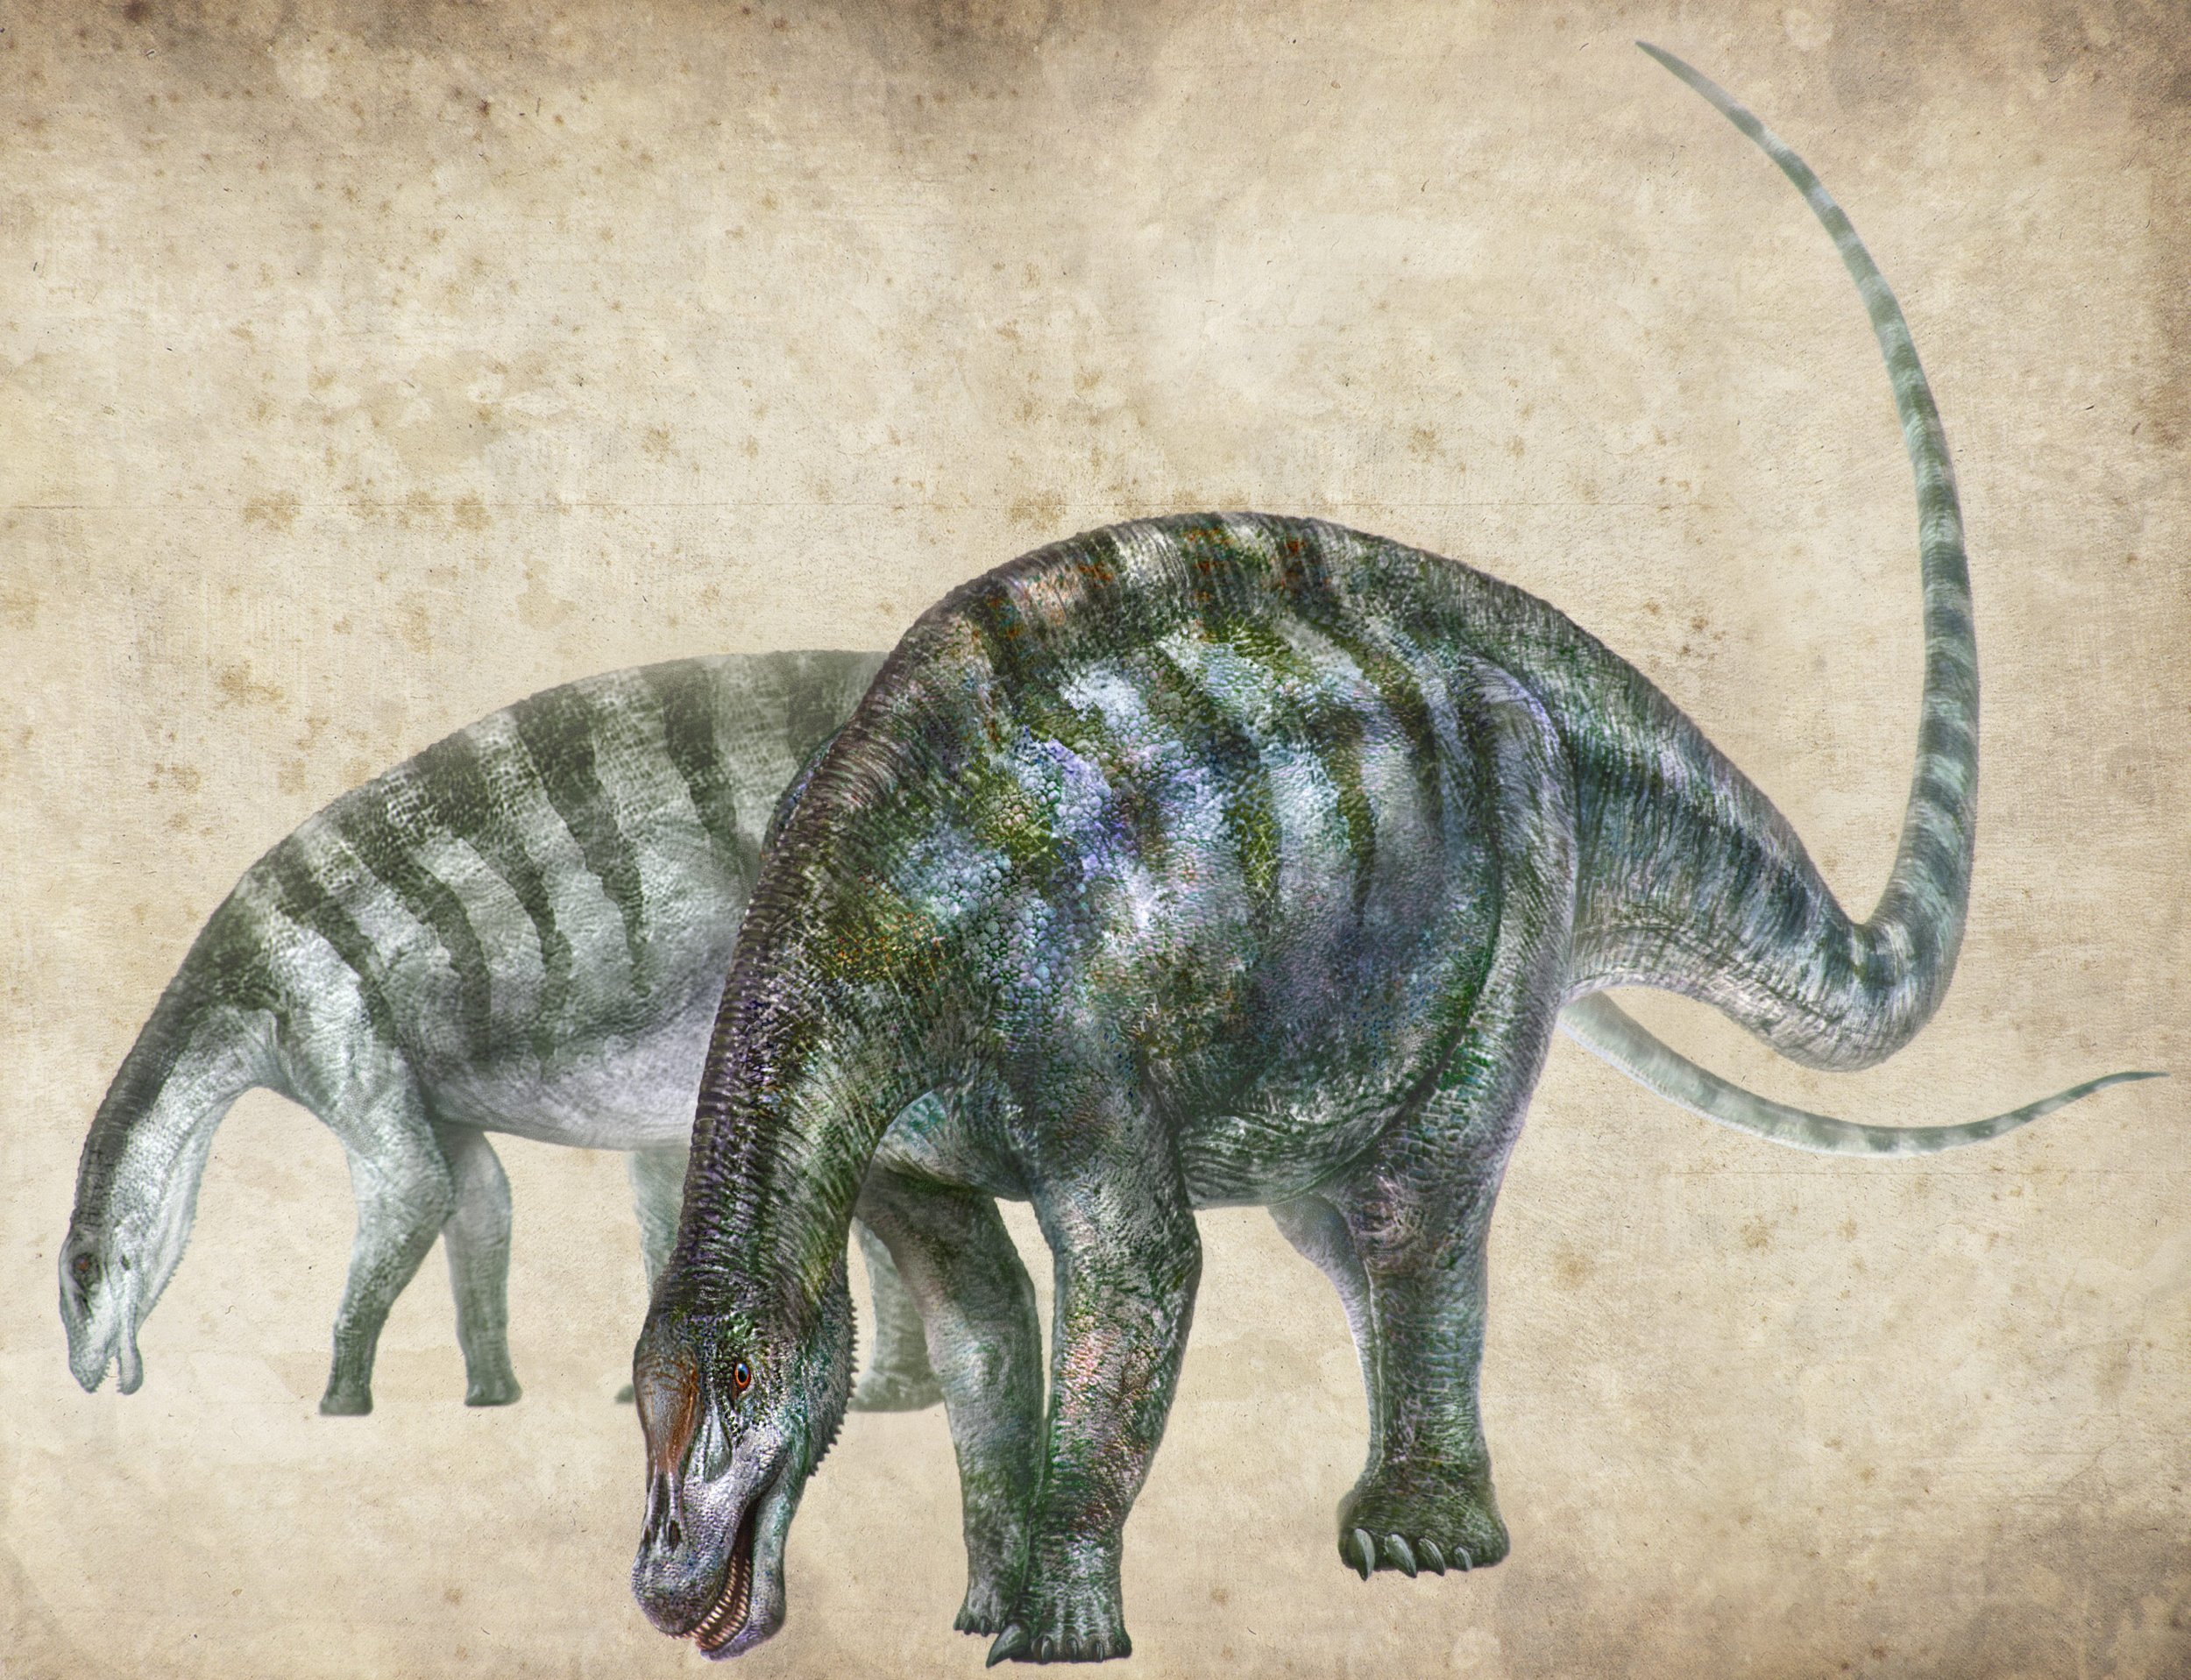 The 'Amazing Dragon of Lingwu' New 50footlong Dinosaur Species Found